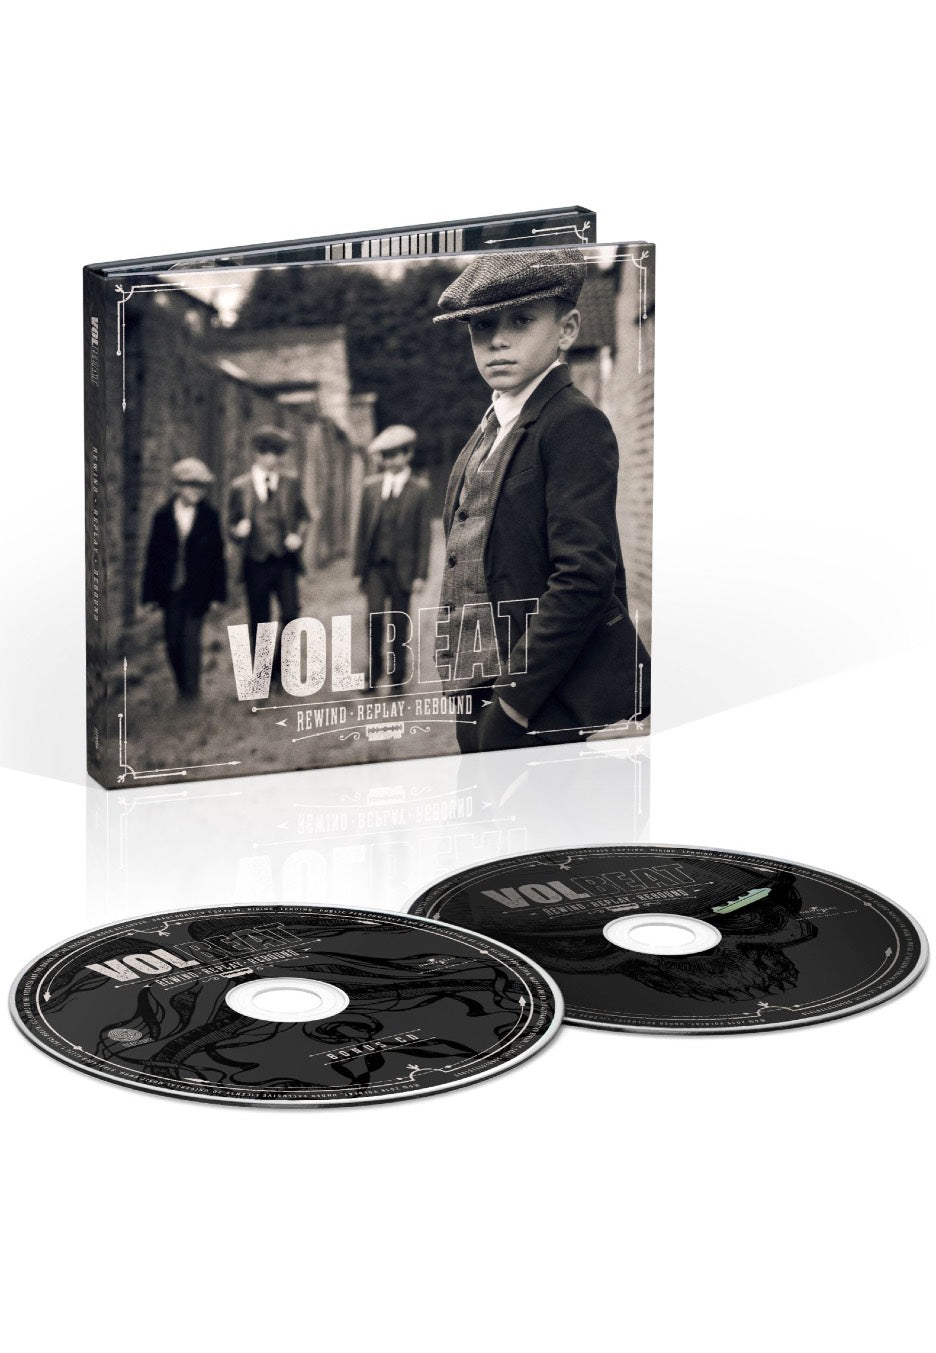 Volbeat - Rewind, Replay, Rebound (Ltd. Deluxe Edition) - Digipak 2 CD